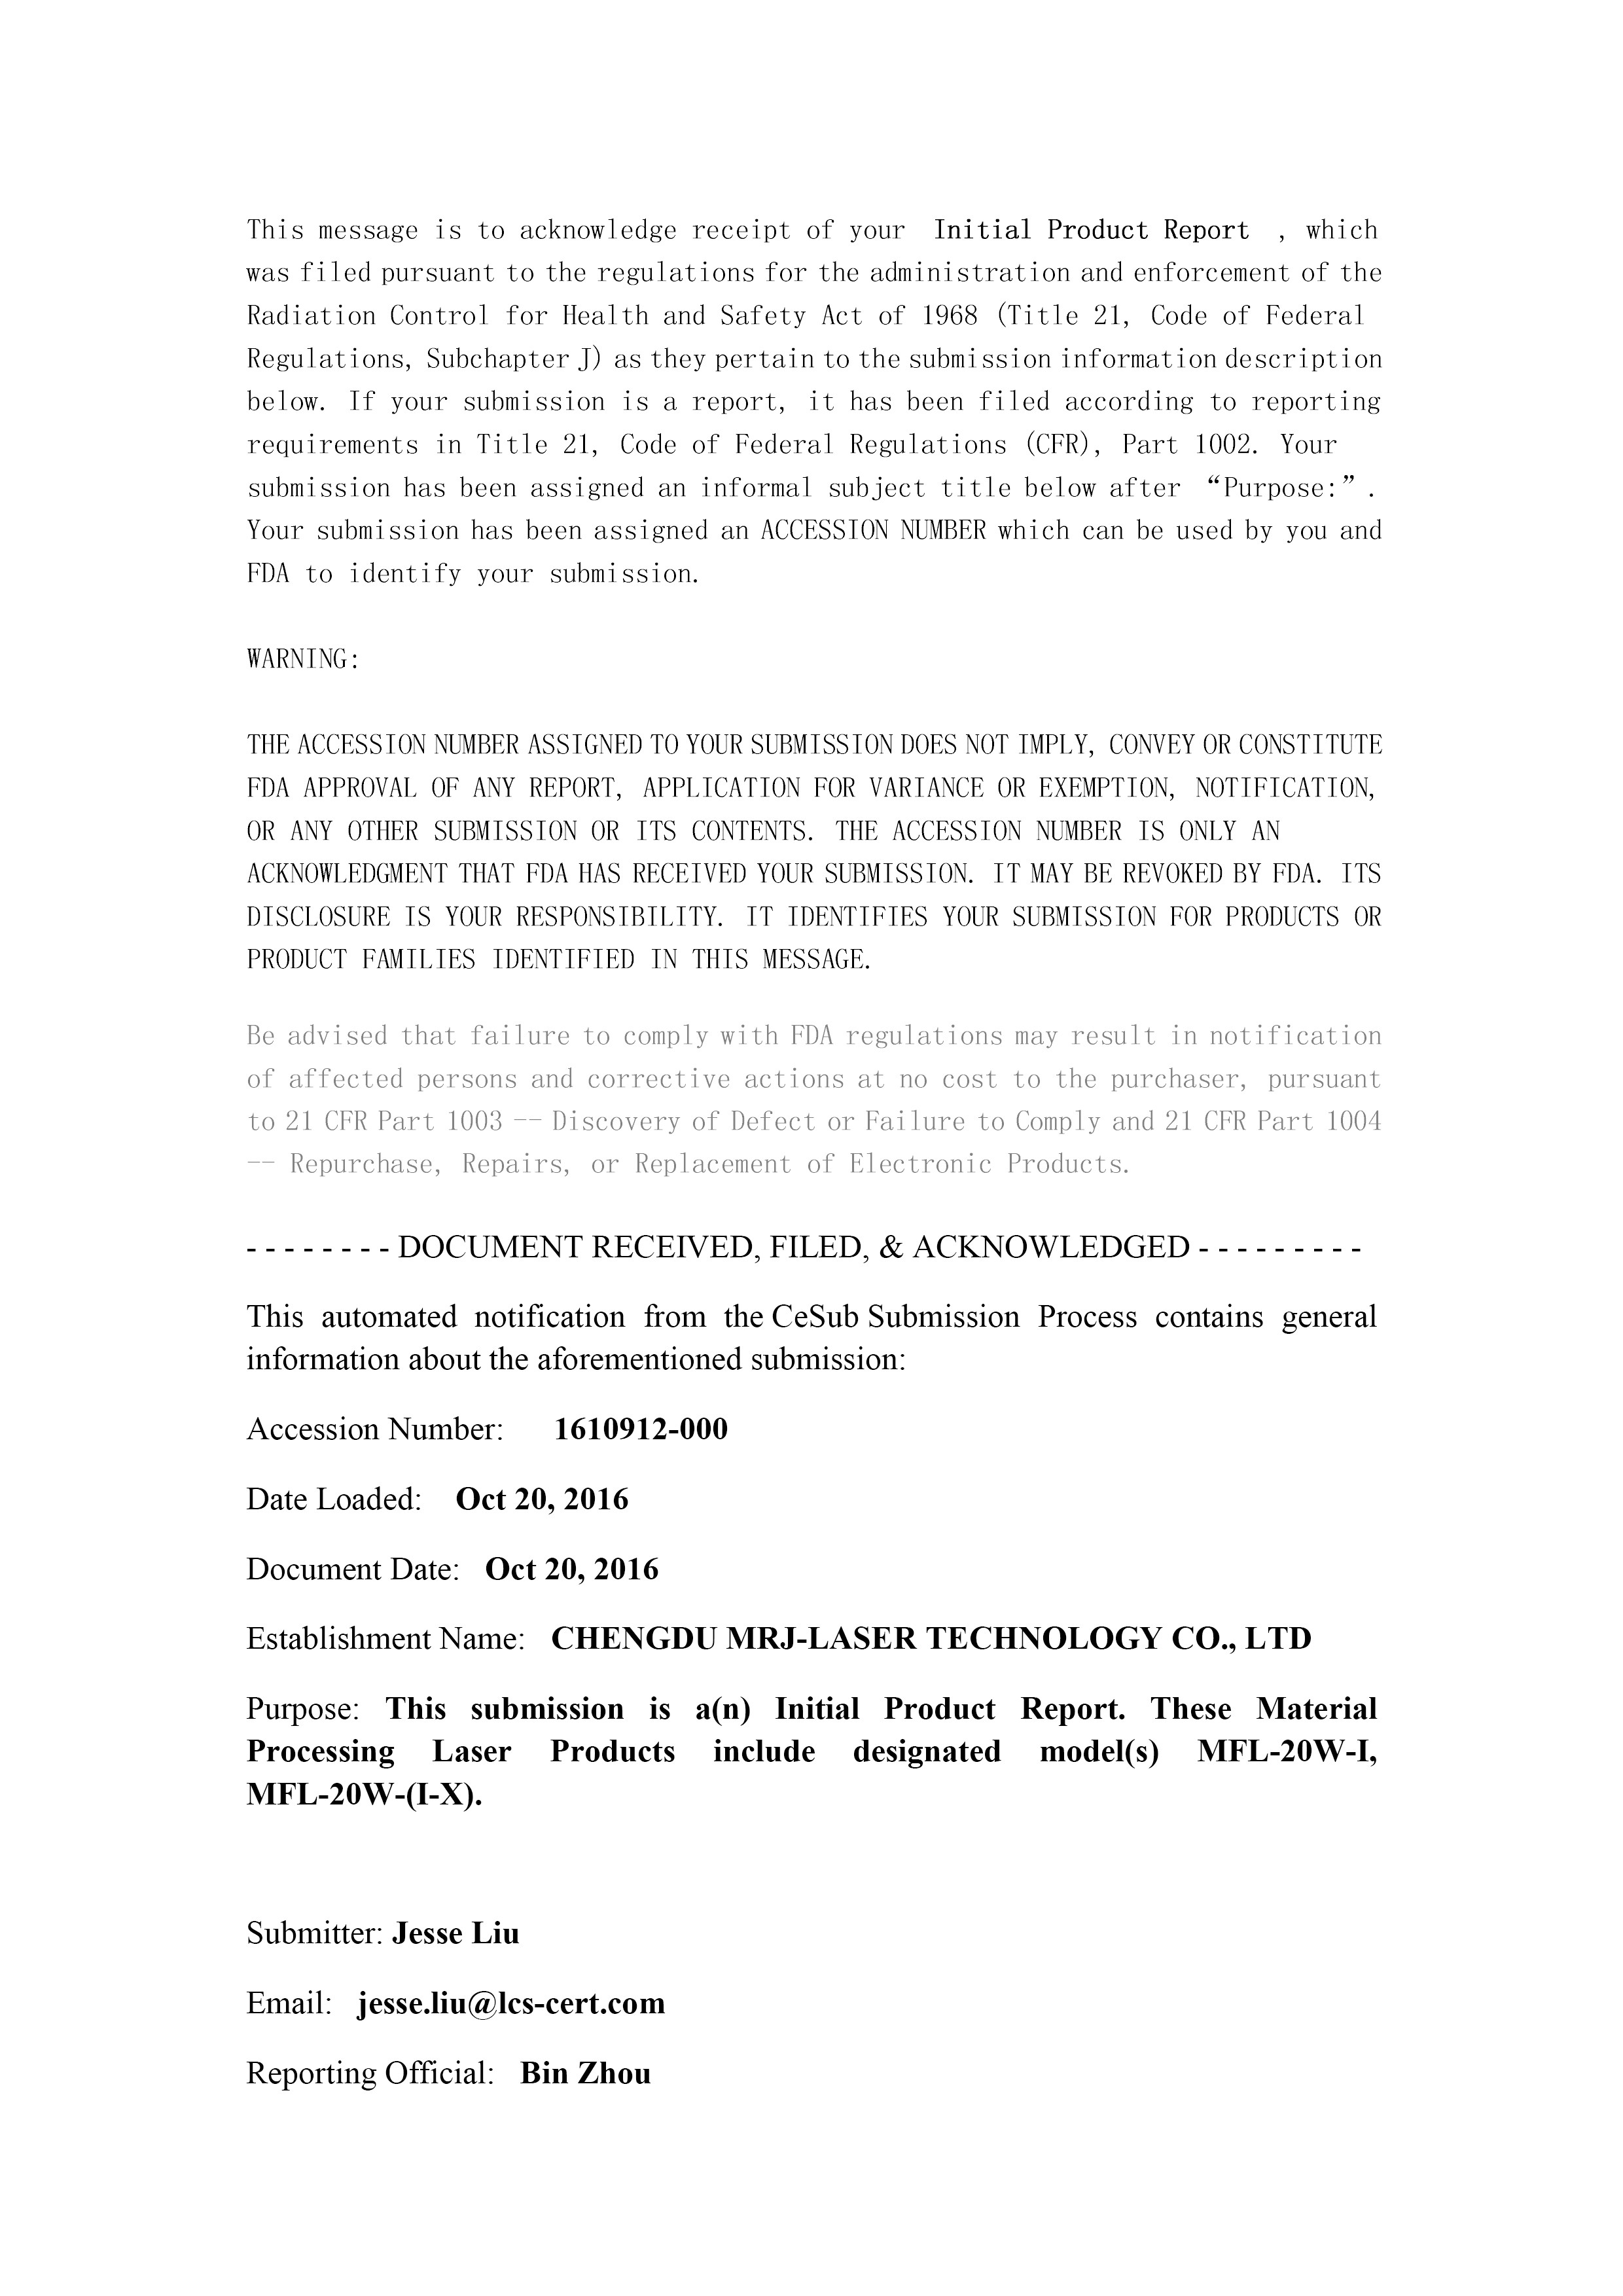 Chengdu MRJ-Laser Technology Co., Ltd. Certifications